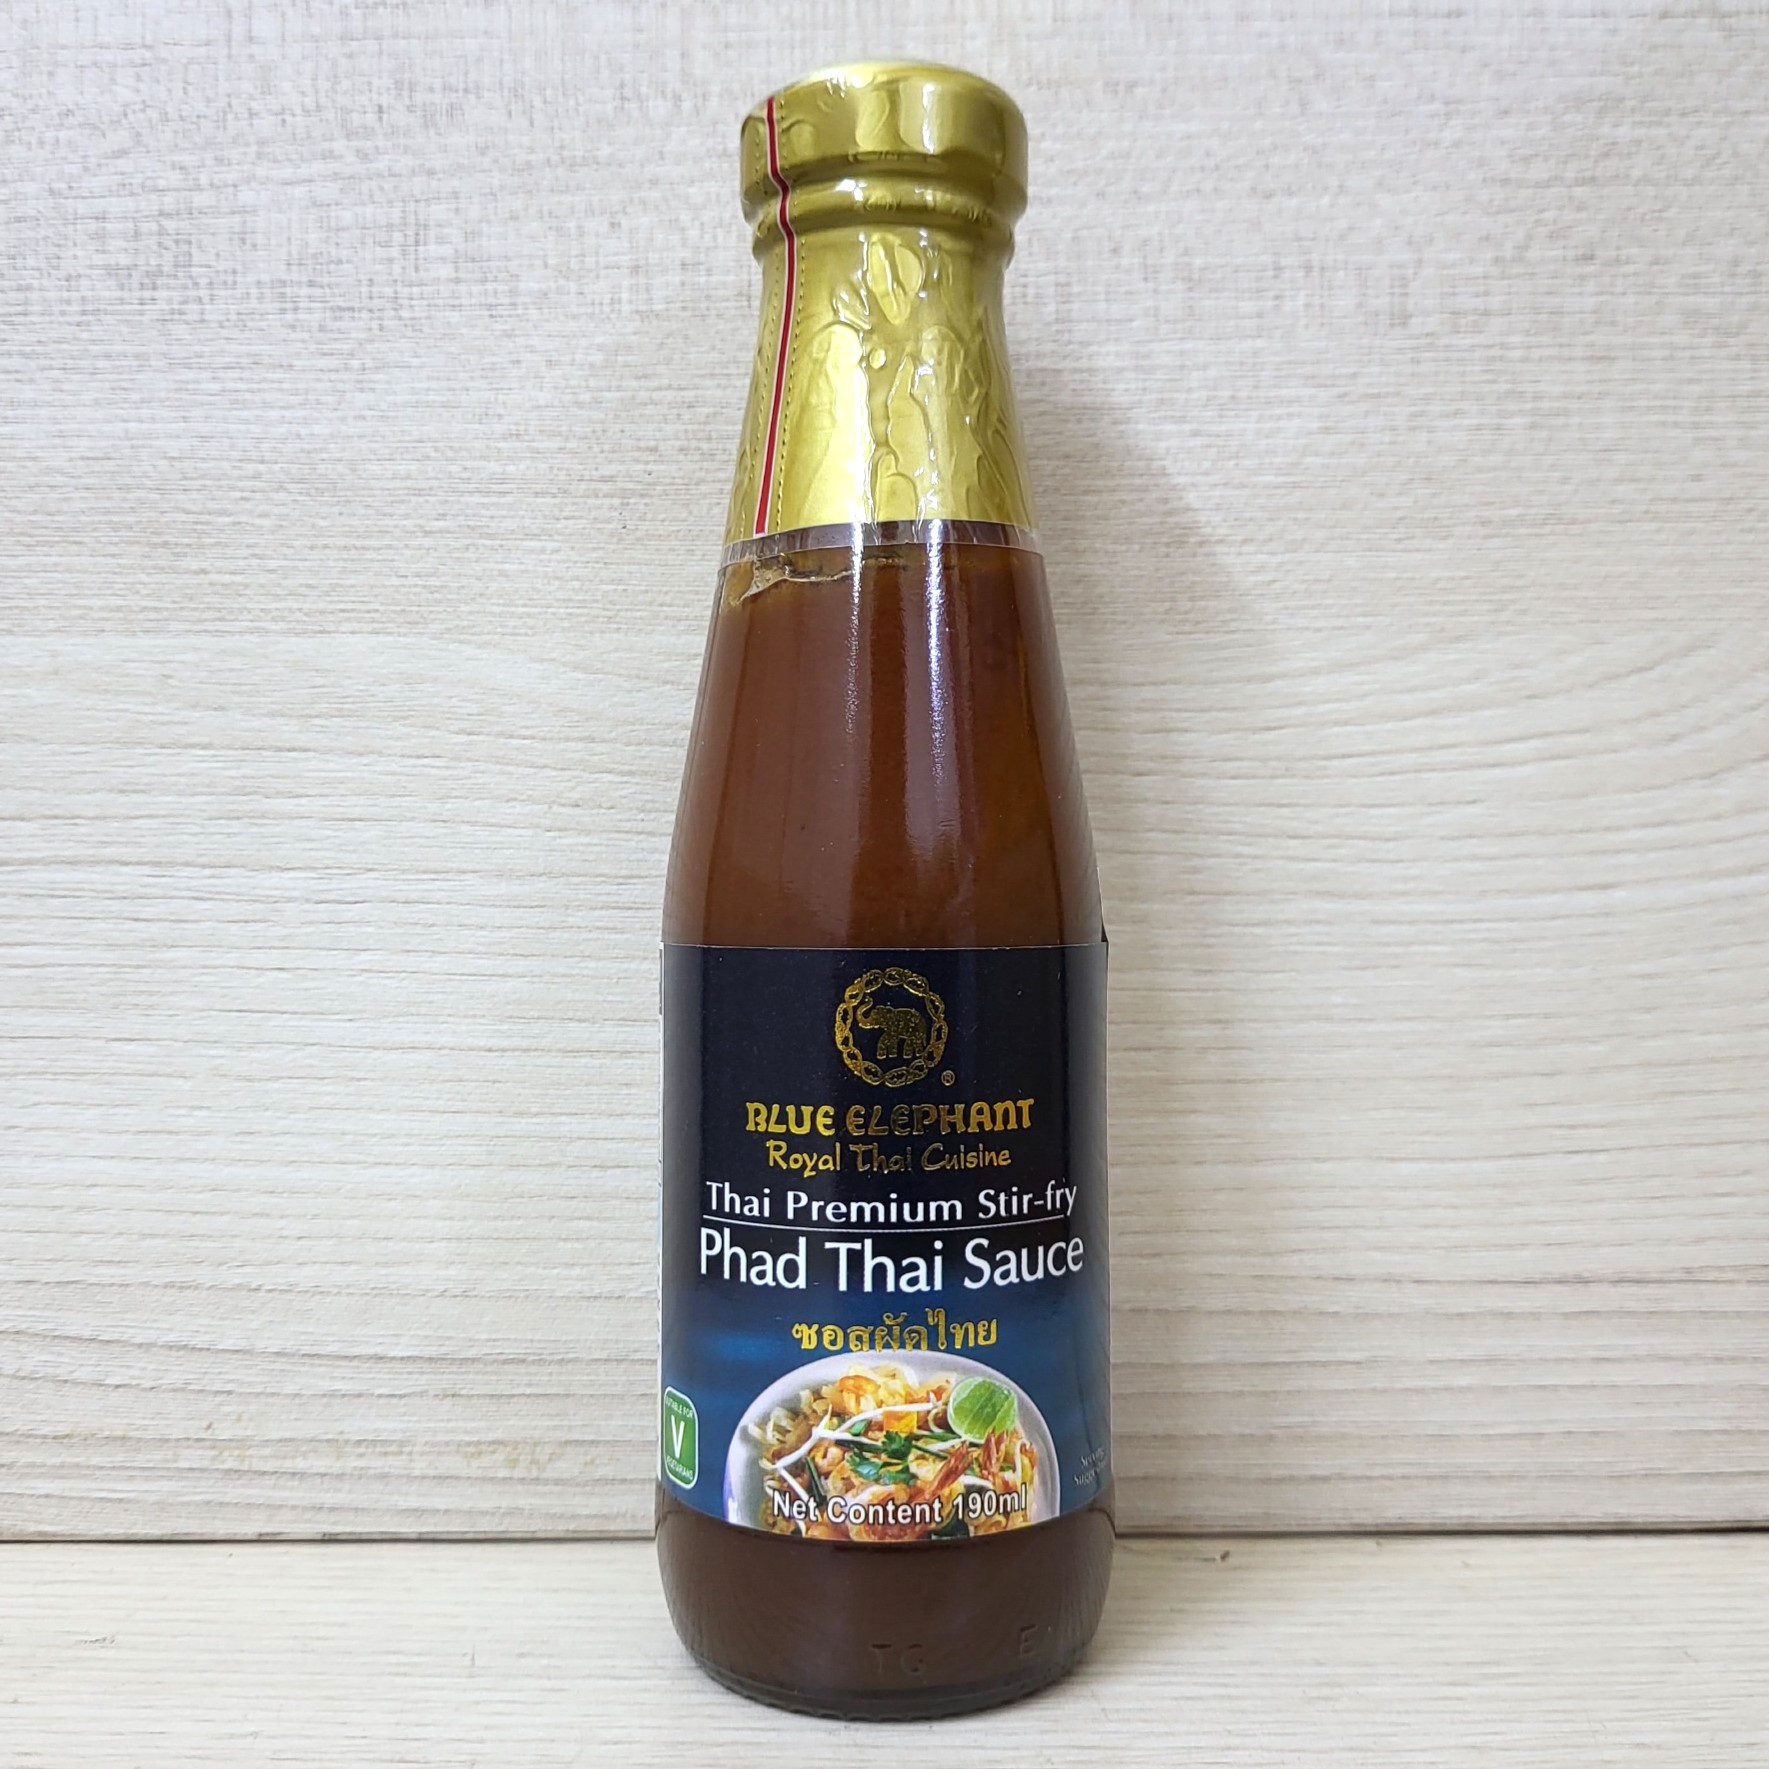 BLUE ELEPHANT chai 190ml SỐT PAD THAI Premium Stir-Fry Phad Thai Sauce